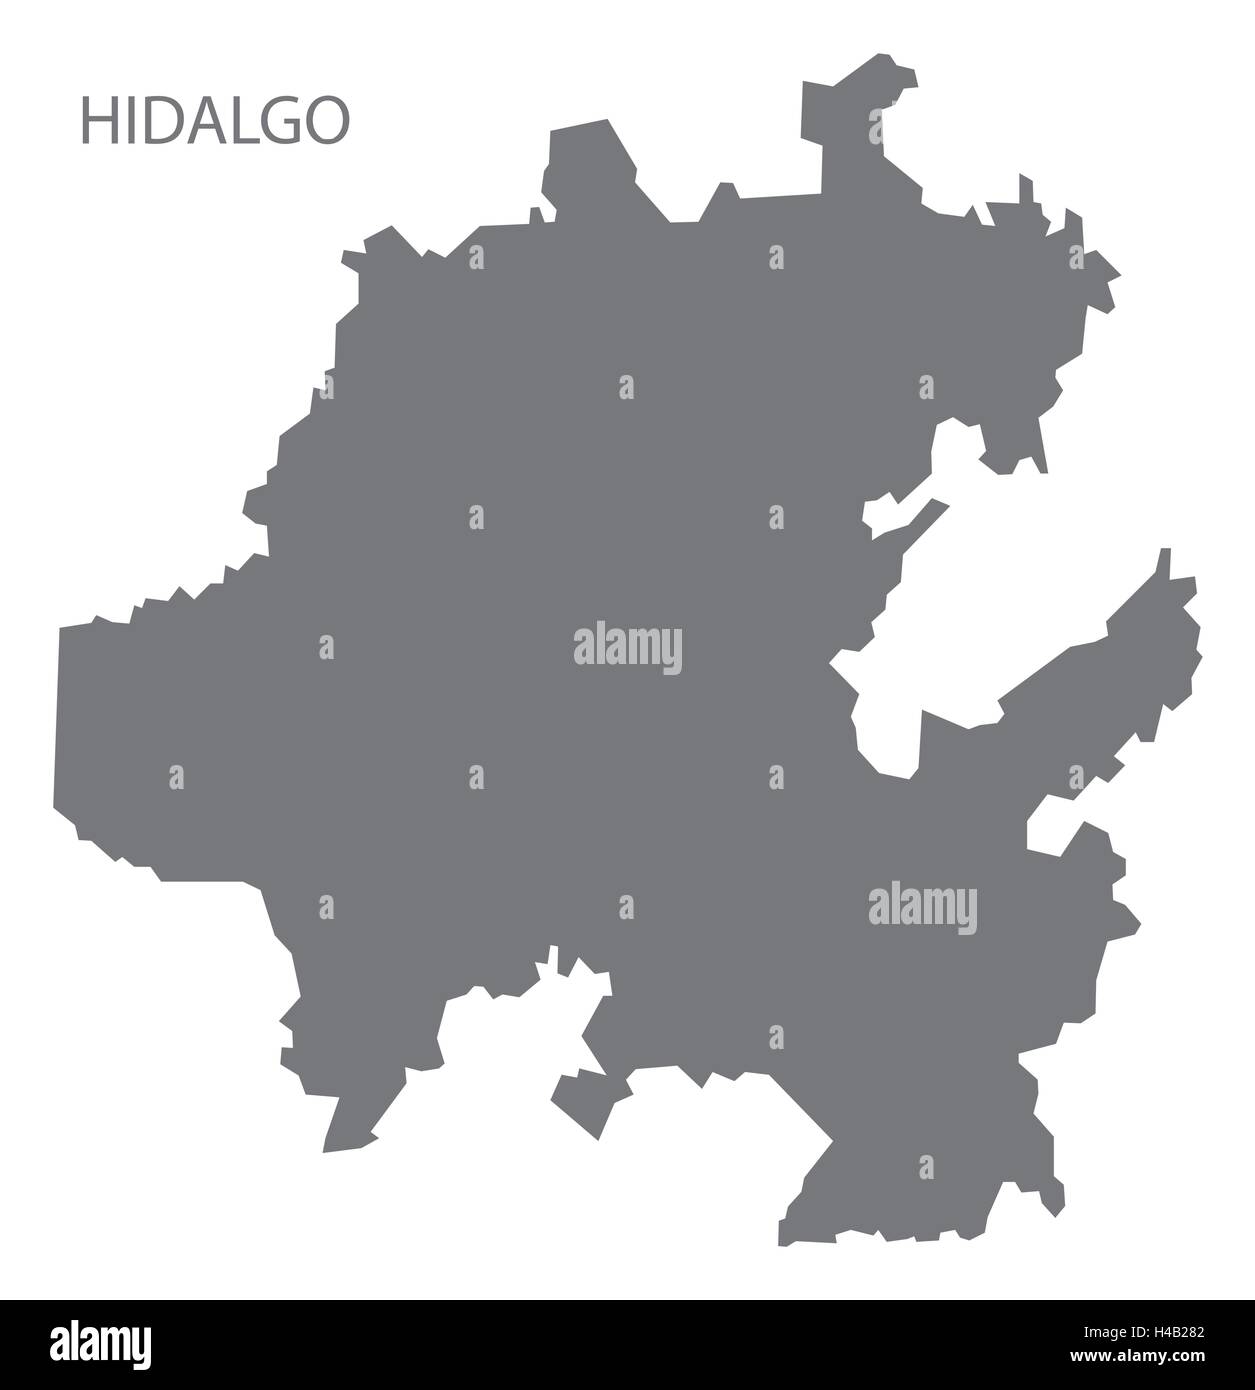 Hidalgo Mexico Map grey Stock Vector